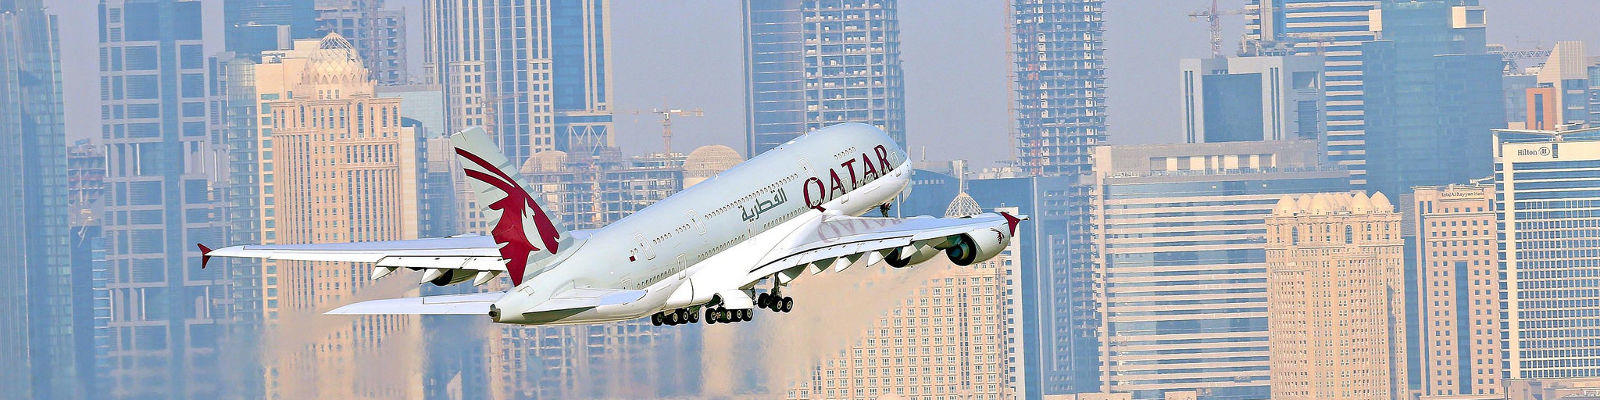 qatar a380 flying with doha skyline behind